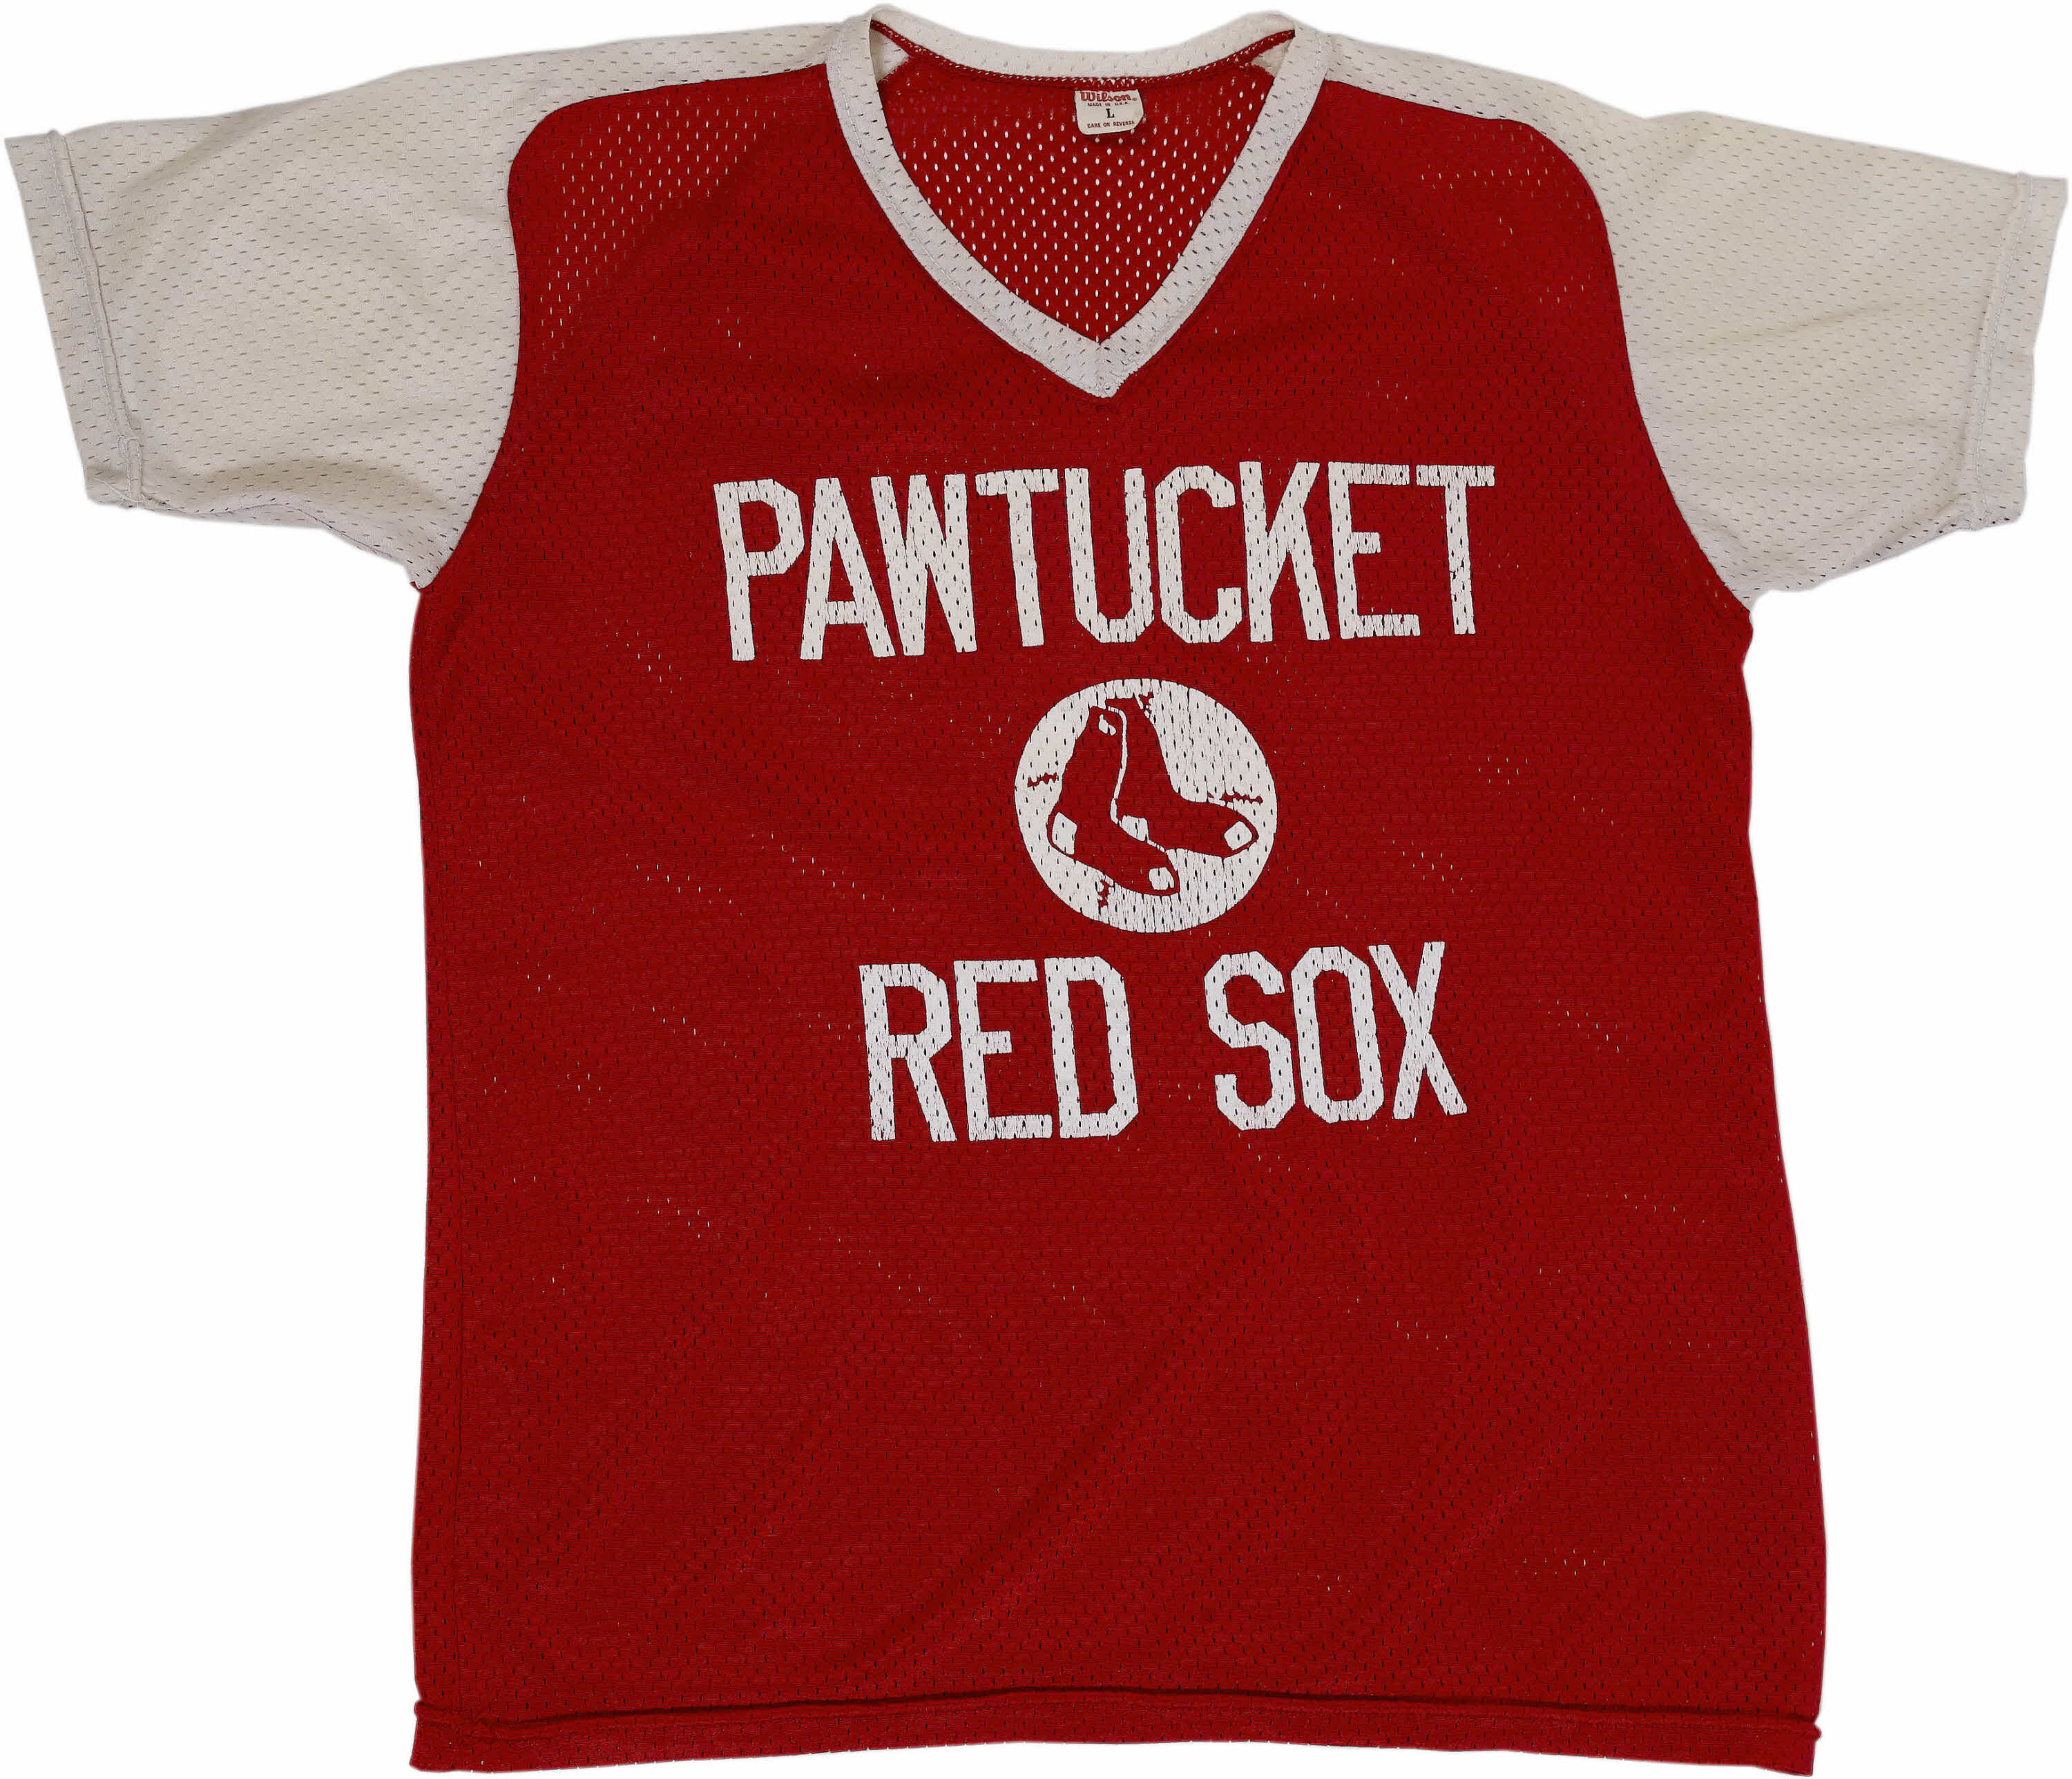 pawtucket red sox shirt